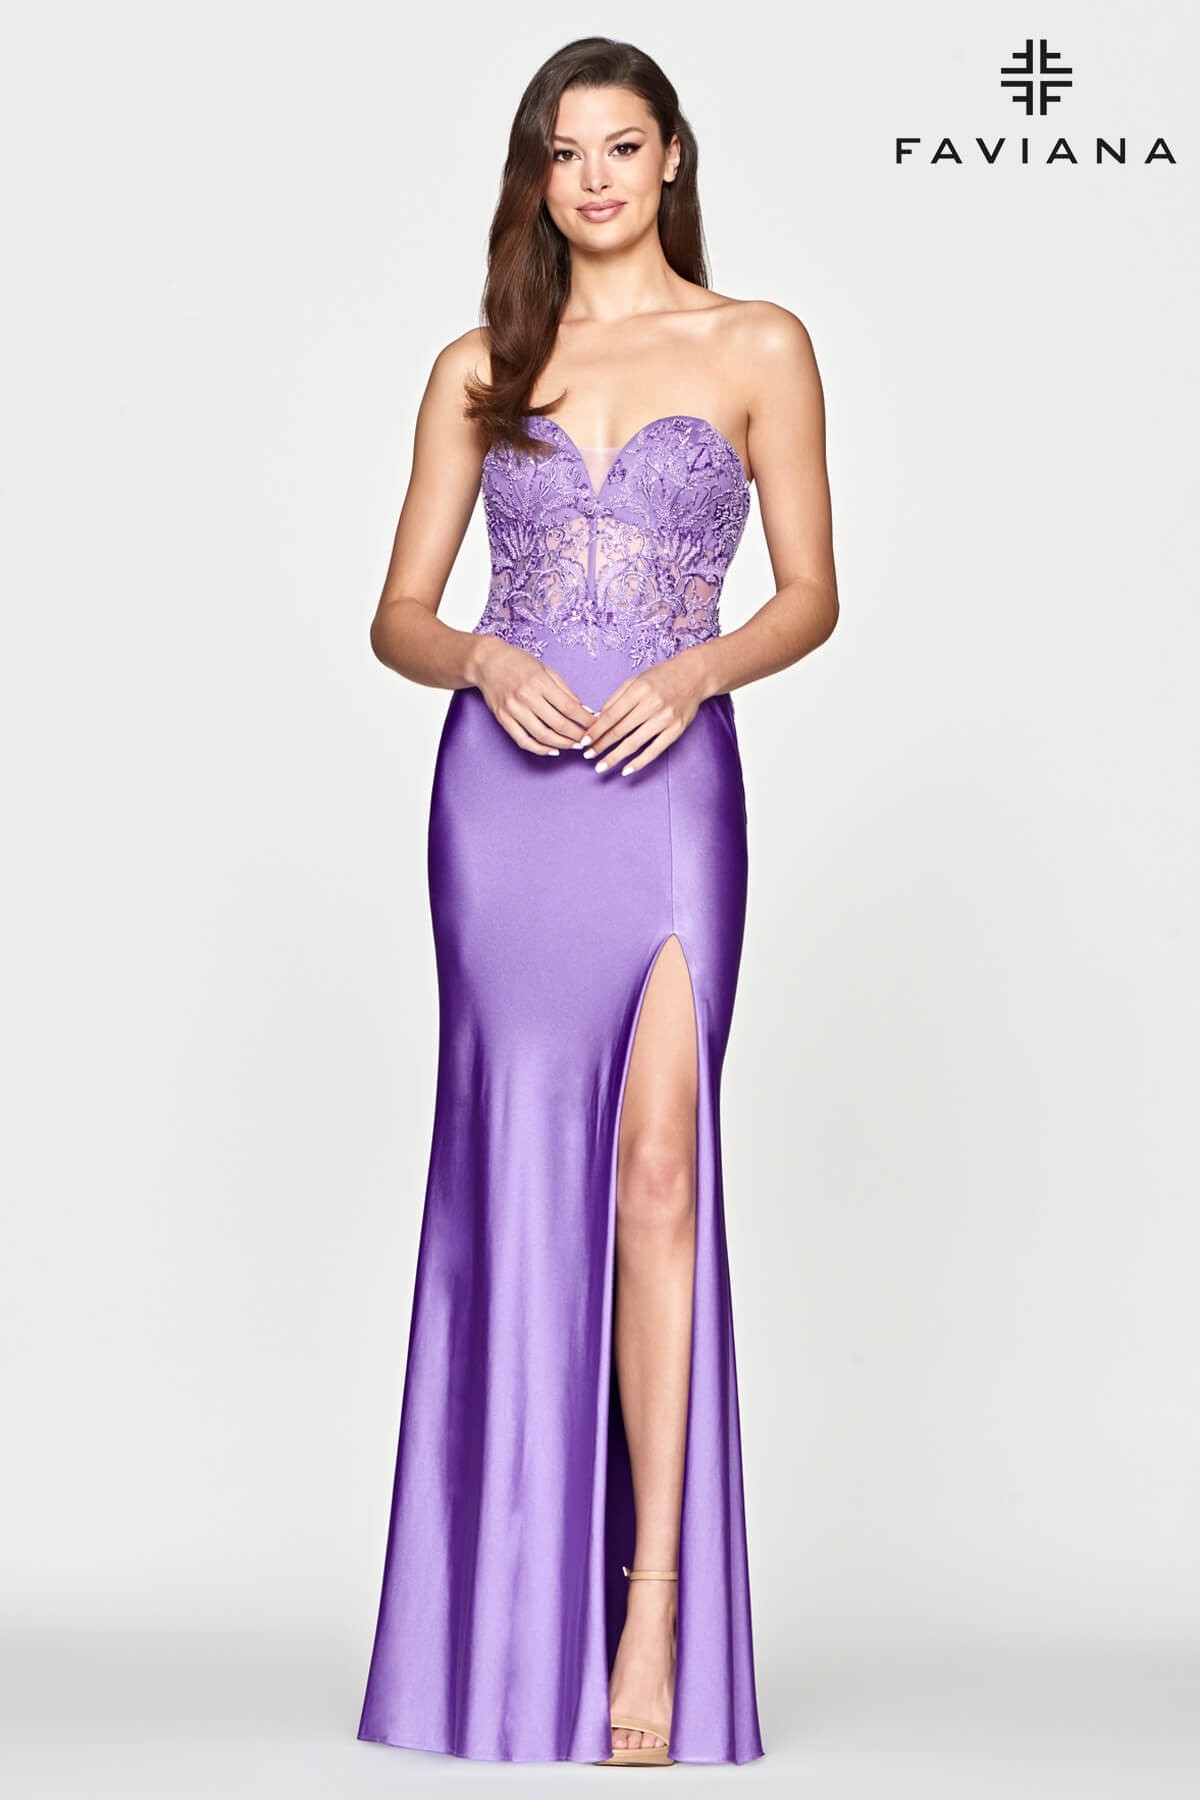 Faviana S10647 Prom Dress